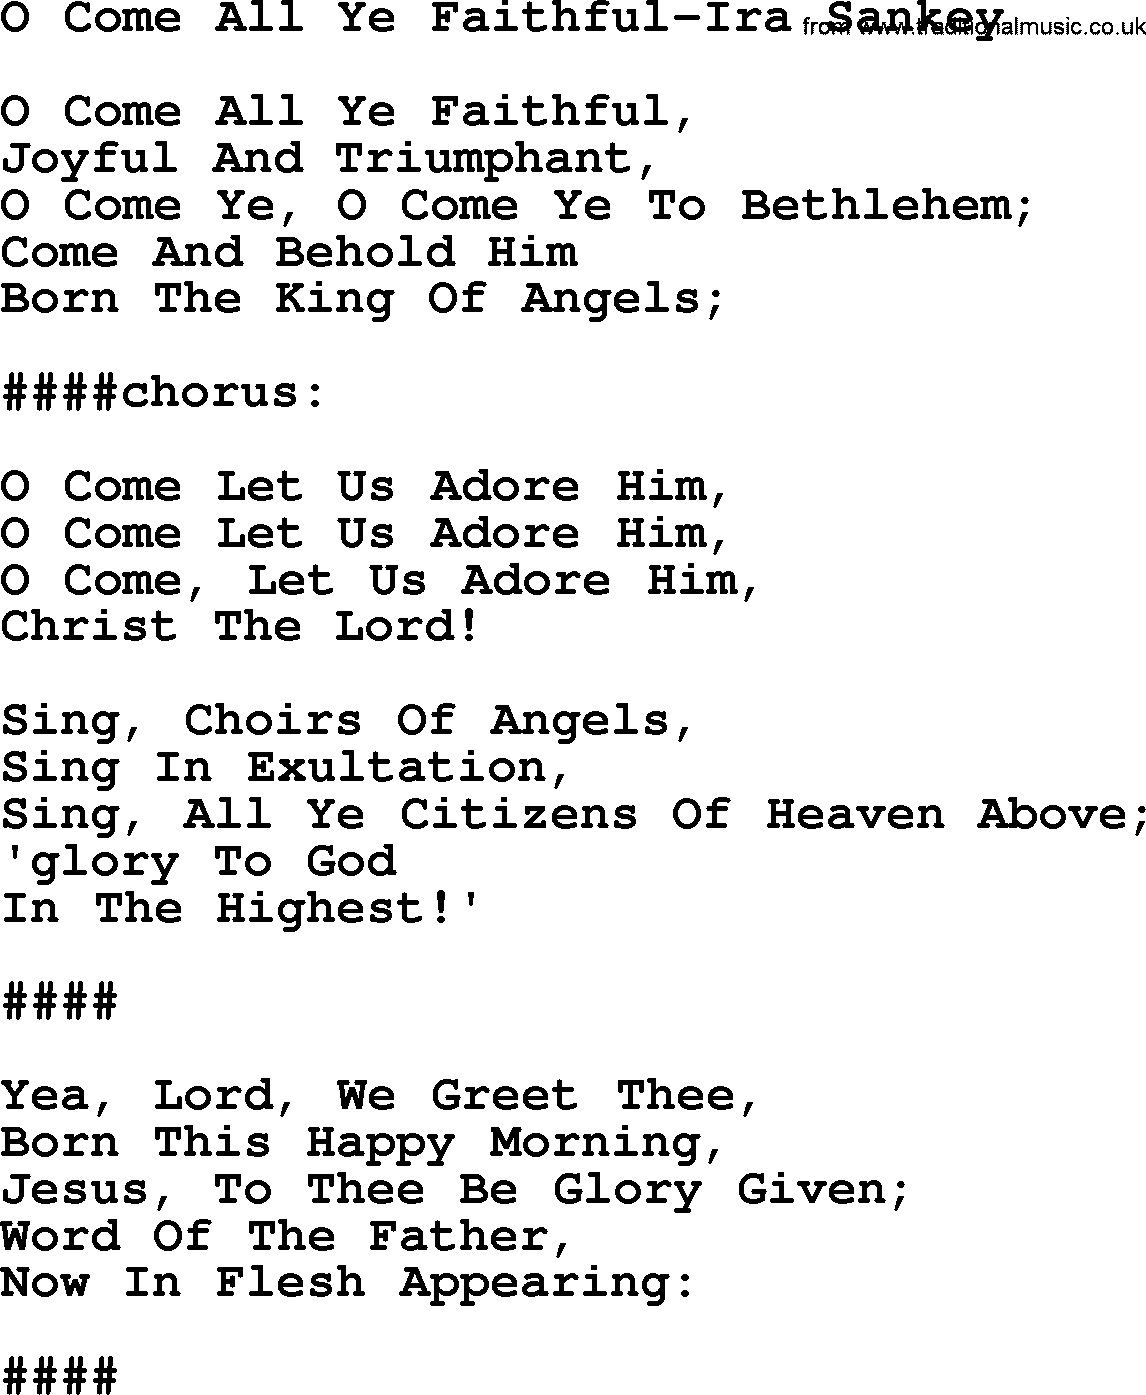 Ira Sankey hymn: O Come All Ye Faithful-Ira Sankey, lyrics